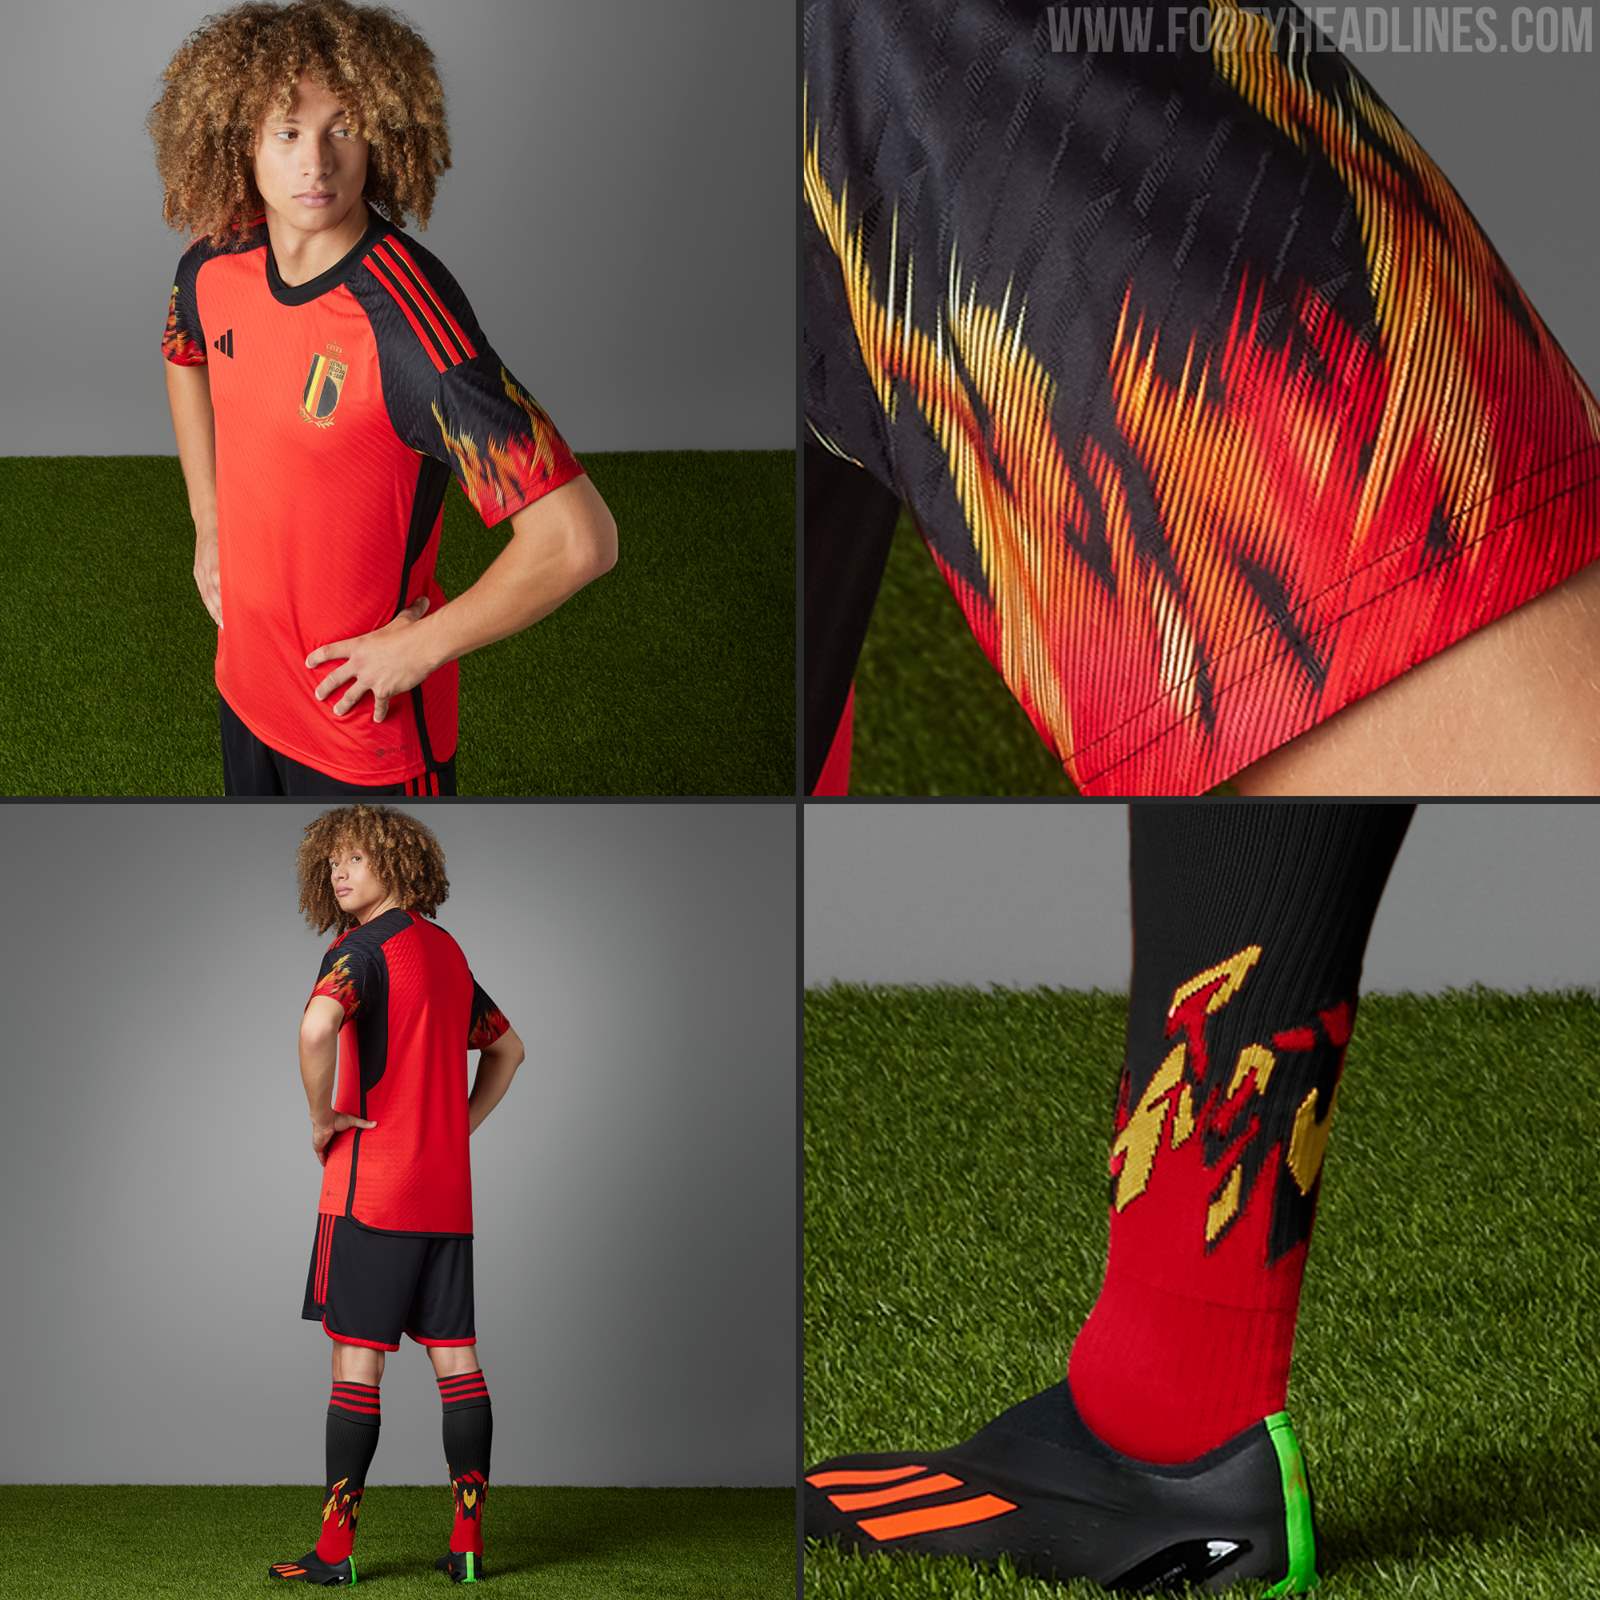 adidas 2020-2021 Belgium Home Football Socks (Red)